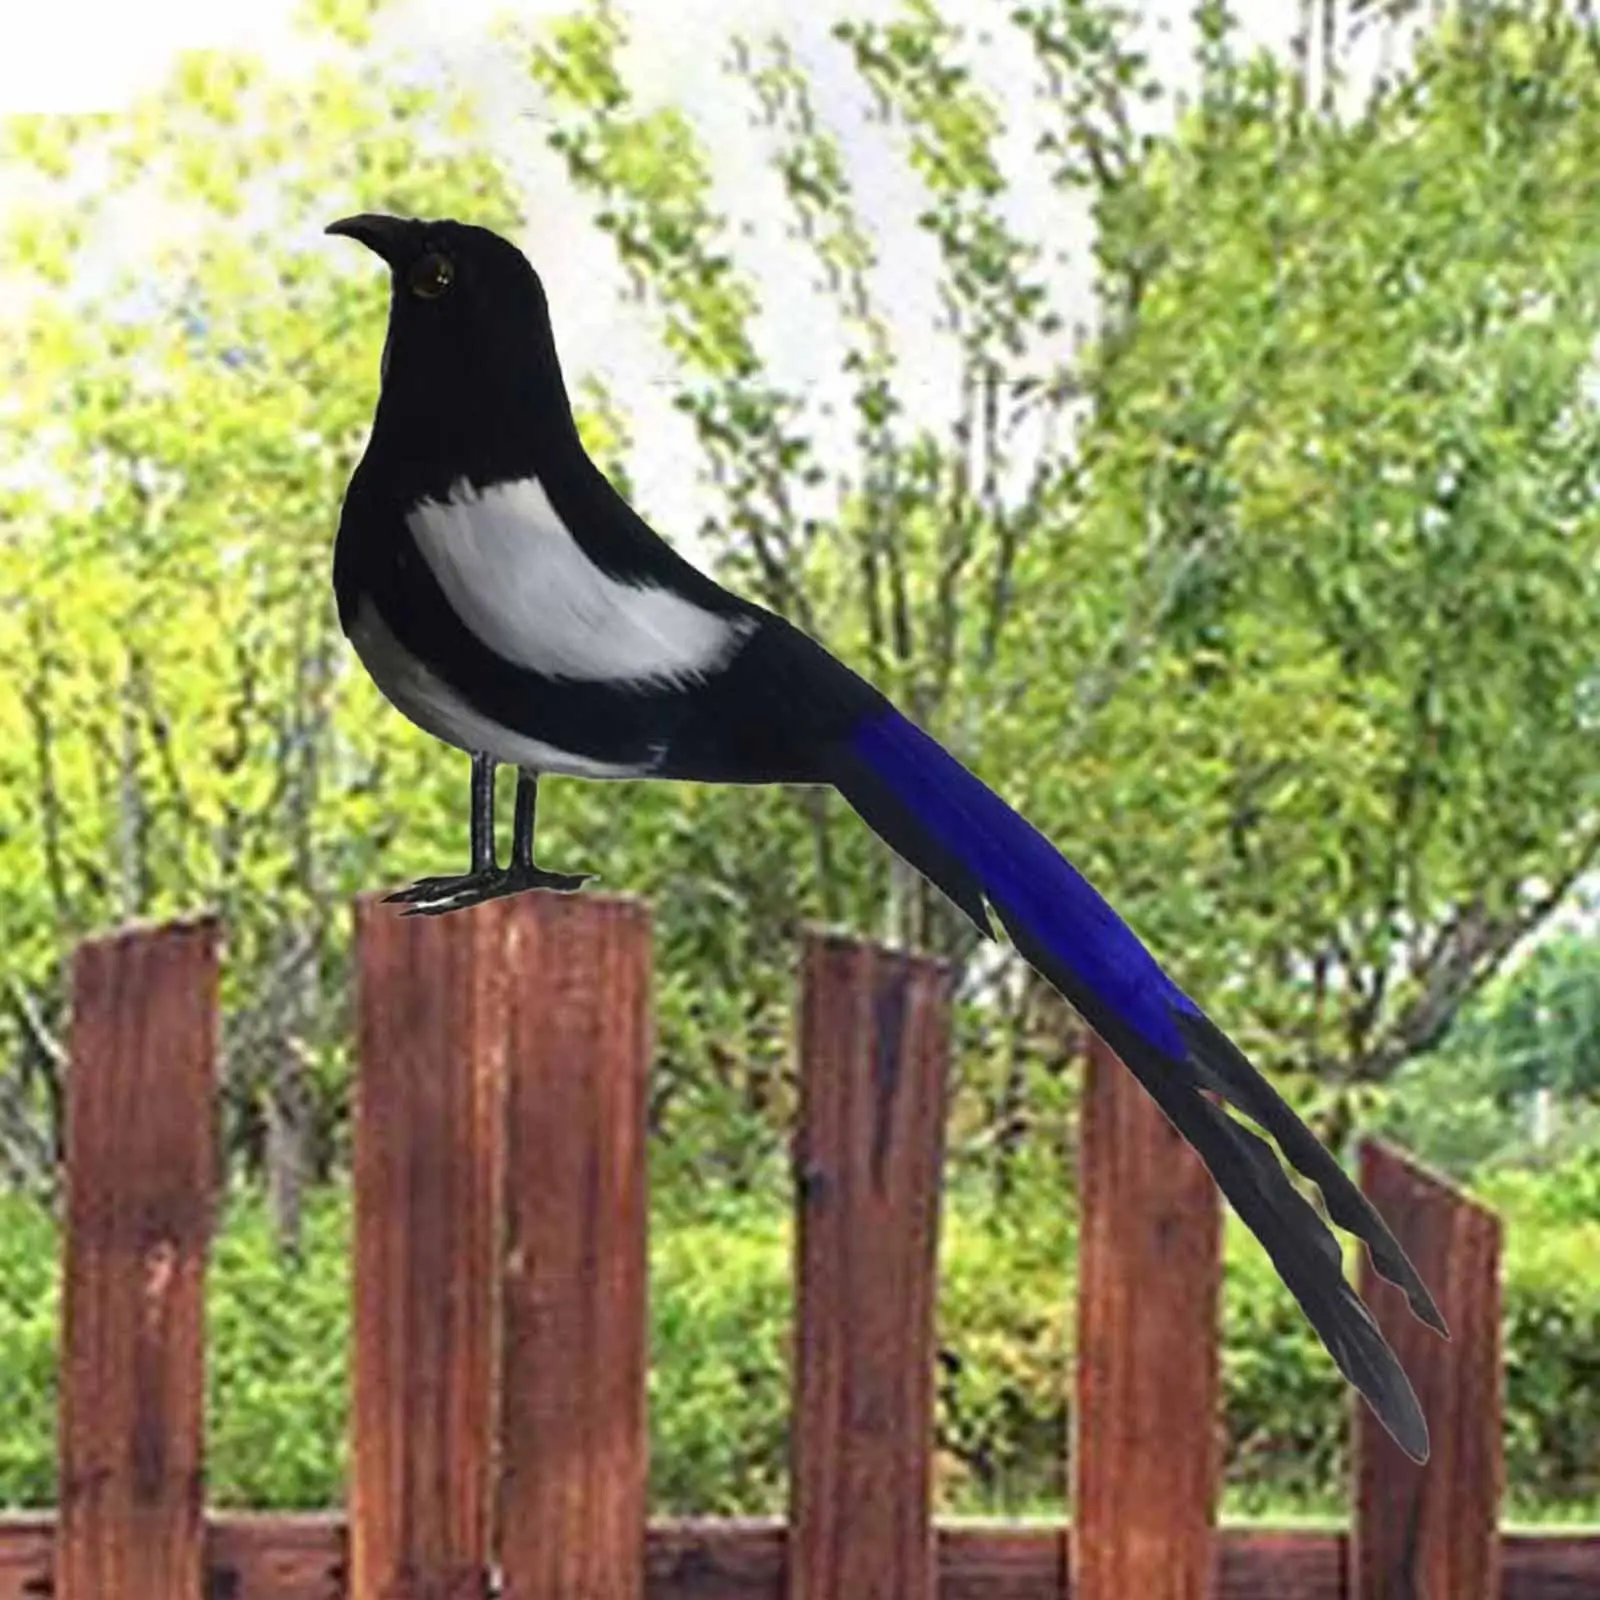 Magpie Simulation Bird Garden Ornament Crafts Bird Statue Artificial Feather Model for Lawn Yard Art Courtyard Outdoor